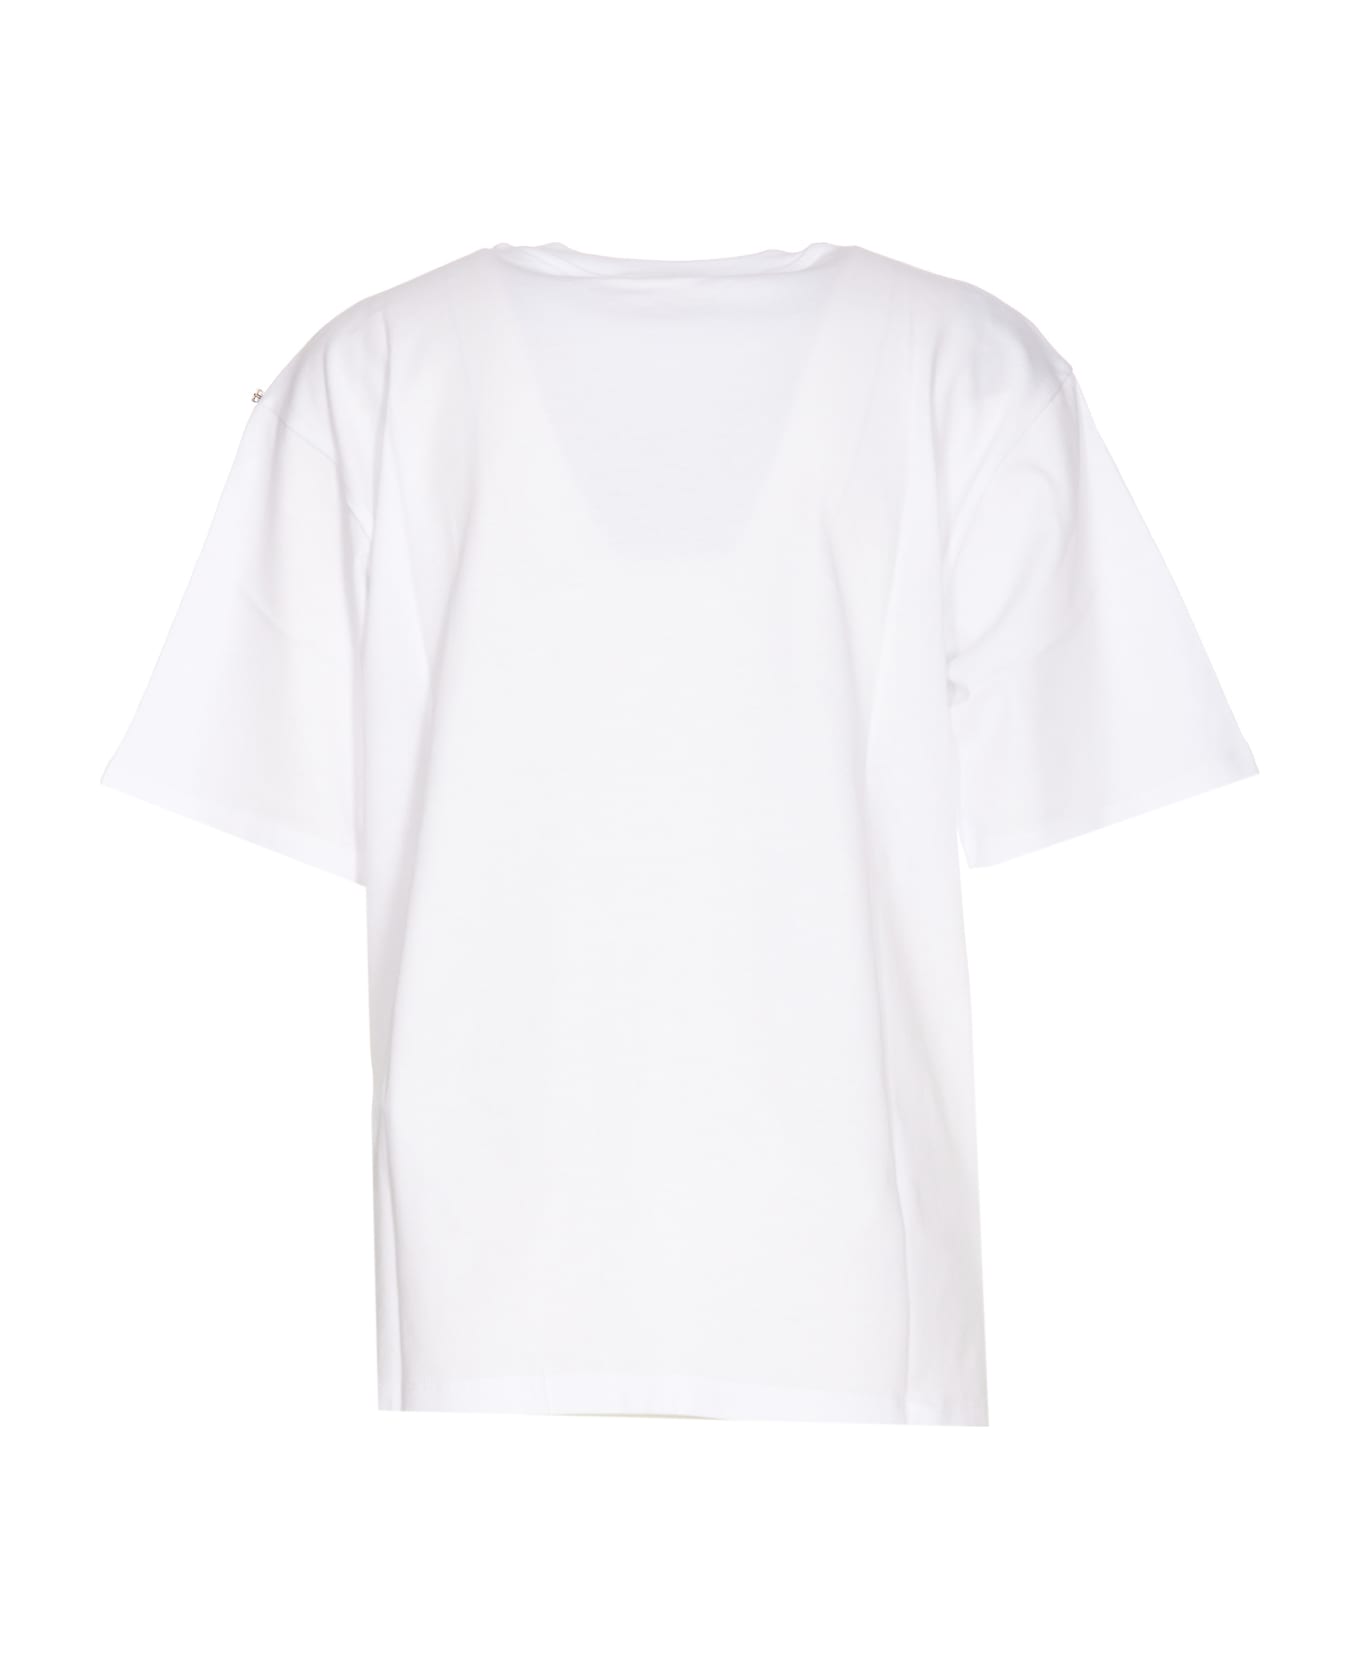 SportMax Clarion T-shirt - White